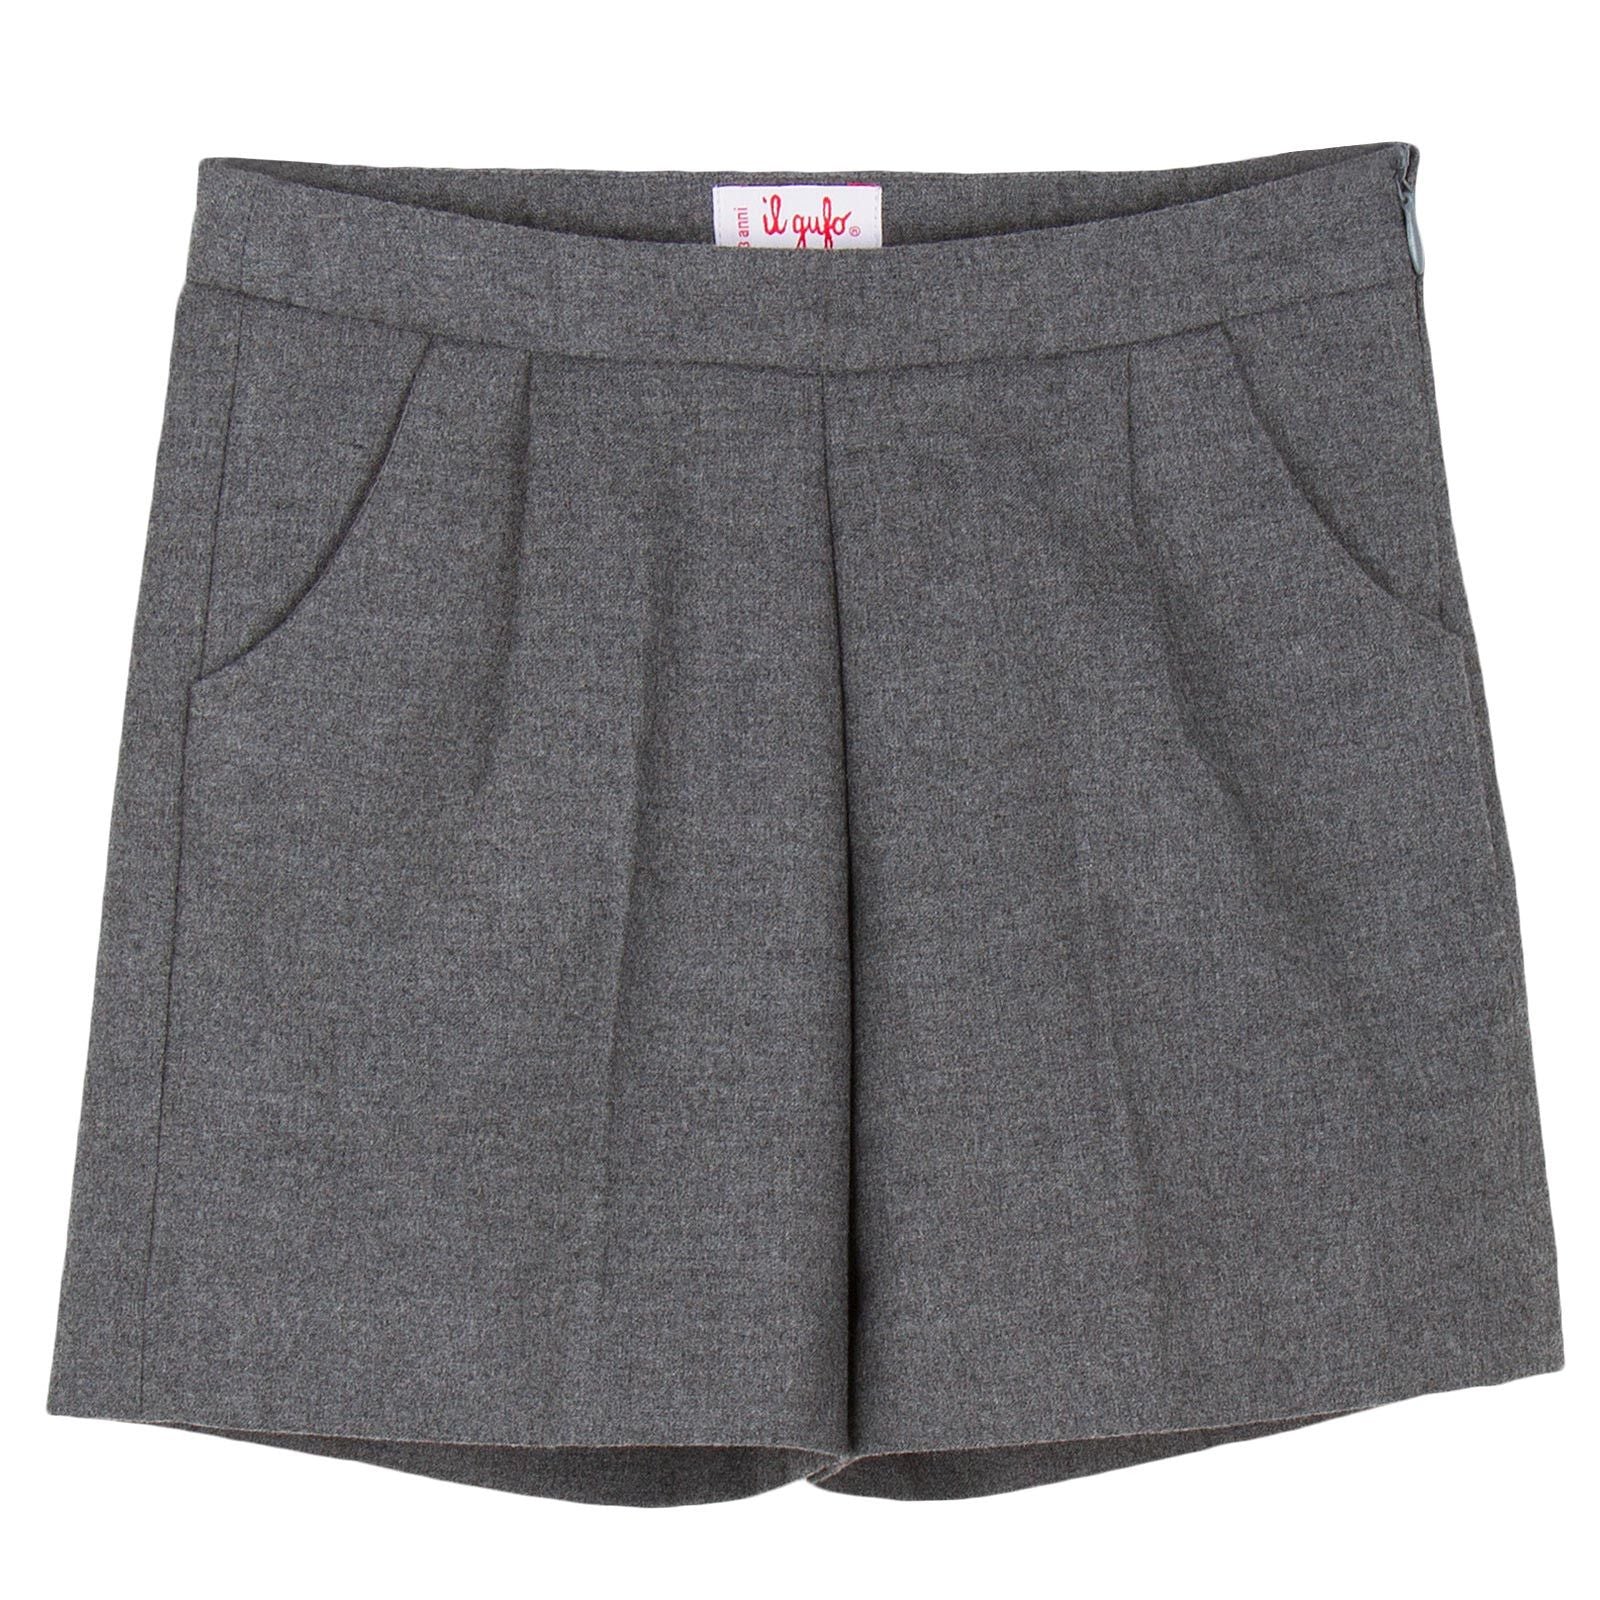 Girls Dark Grey Synthetic Wool Bermuda Short - CÉMAROSE | Children's Fashion Store - 1